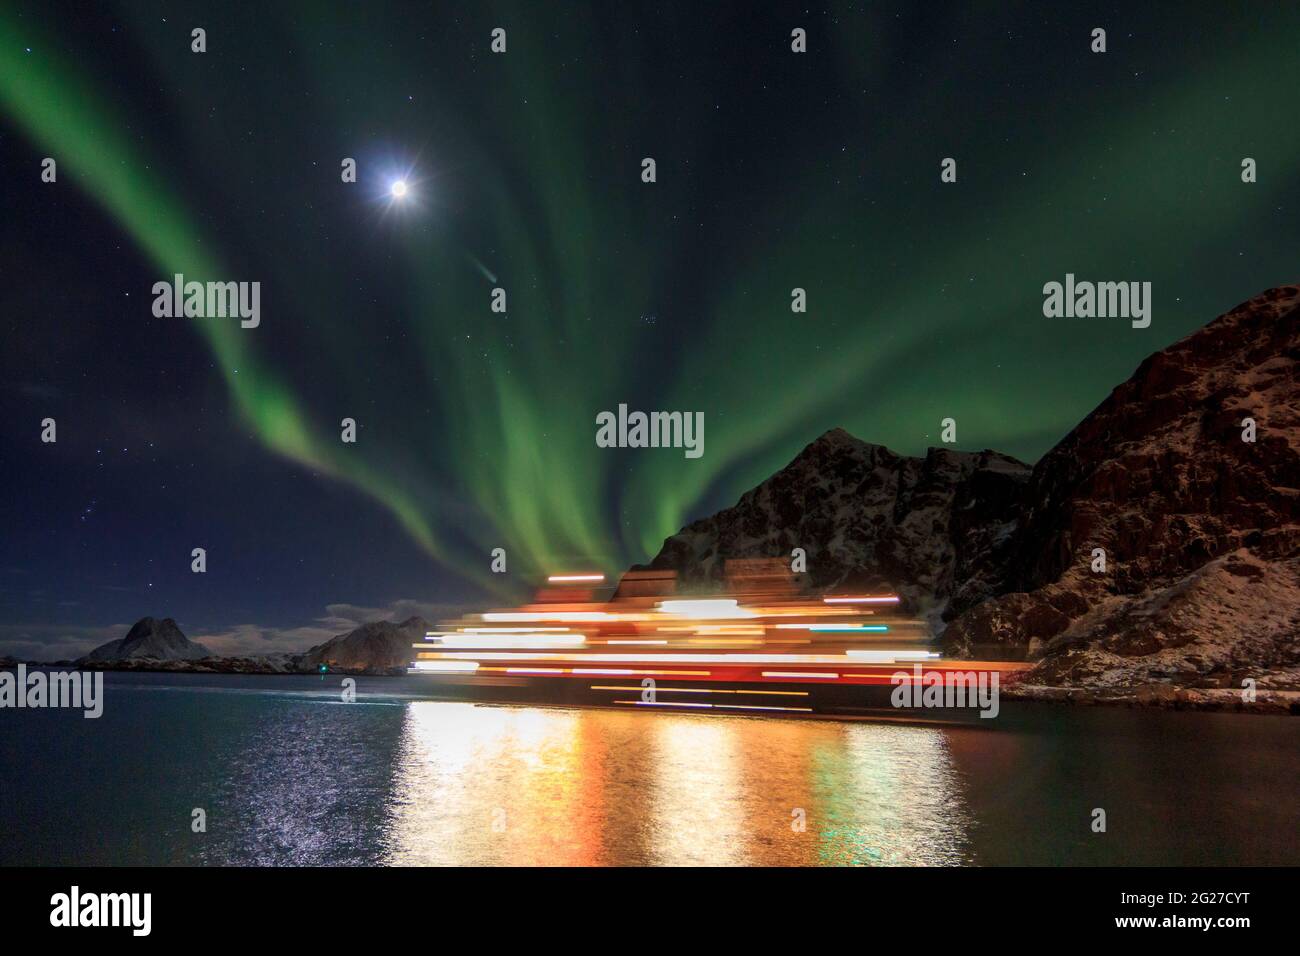 Hurtigruten postal ship with northern lights., Norway Stock Photo - Alamy